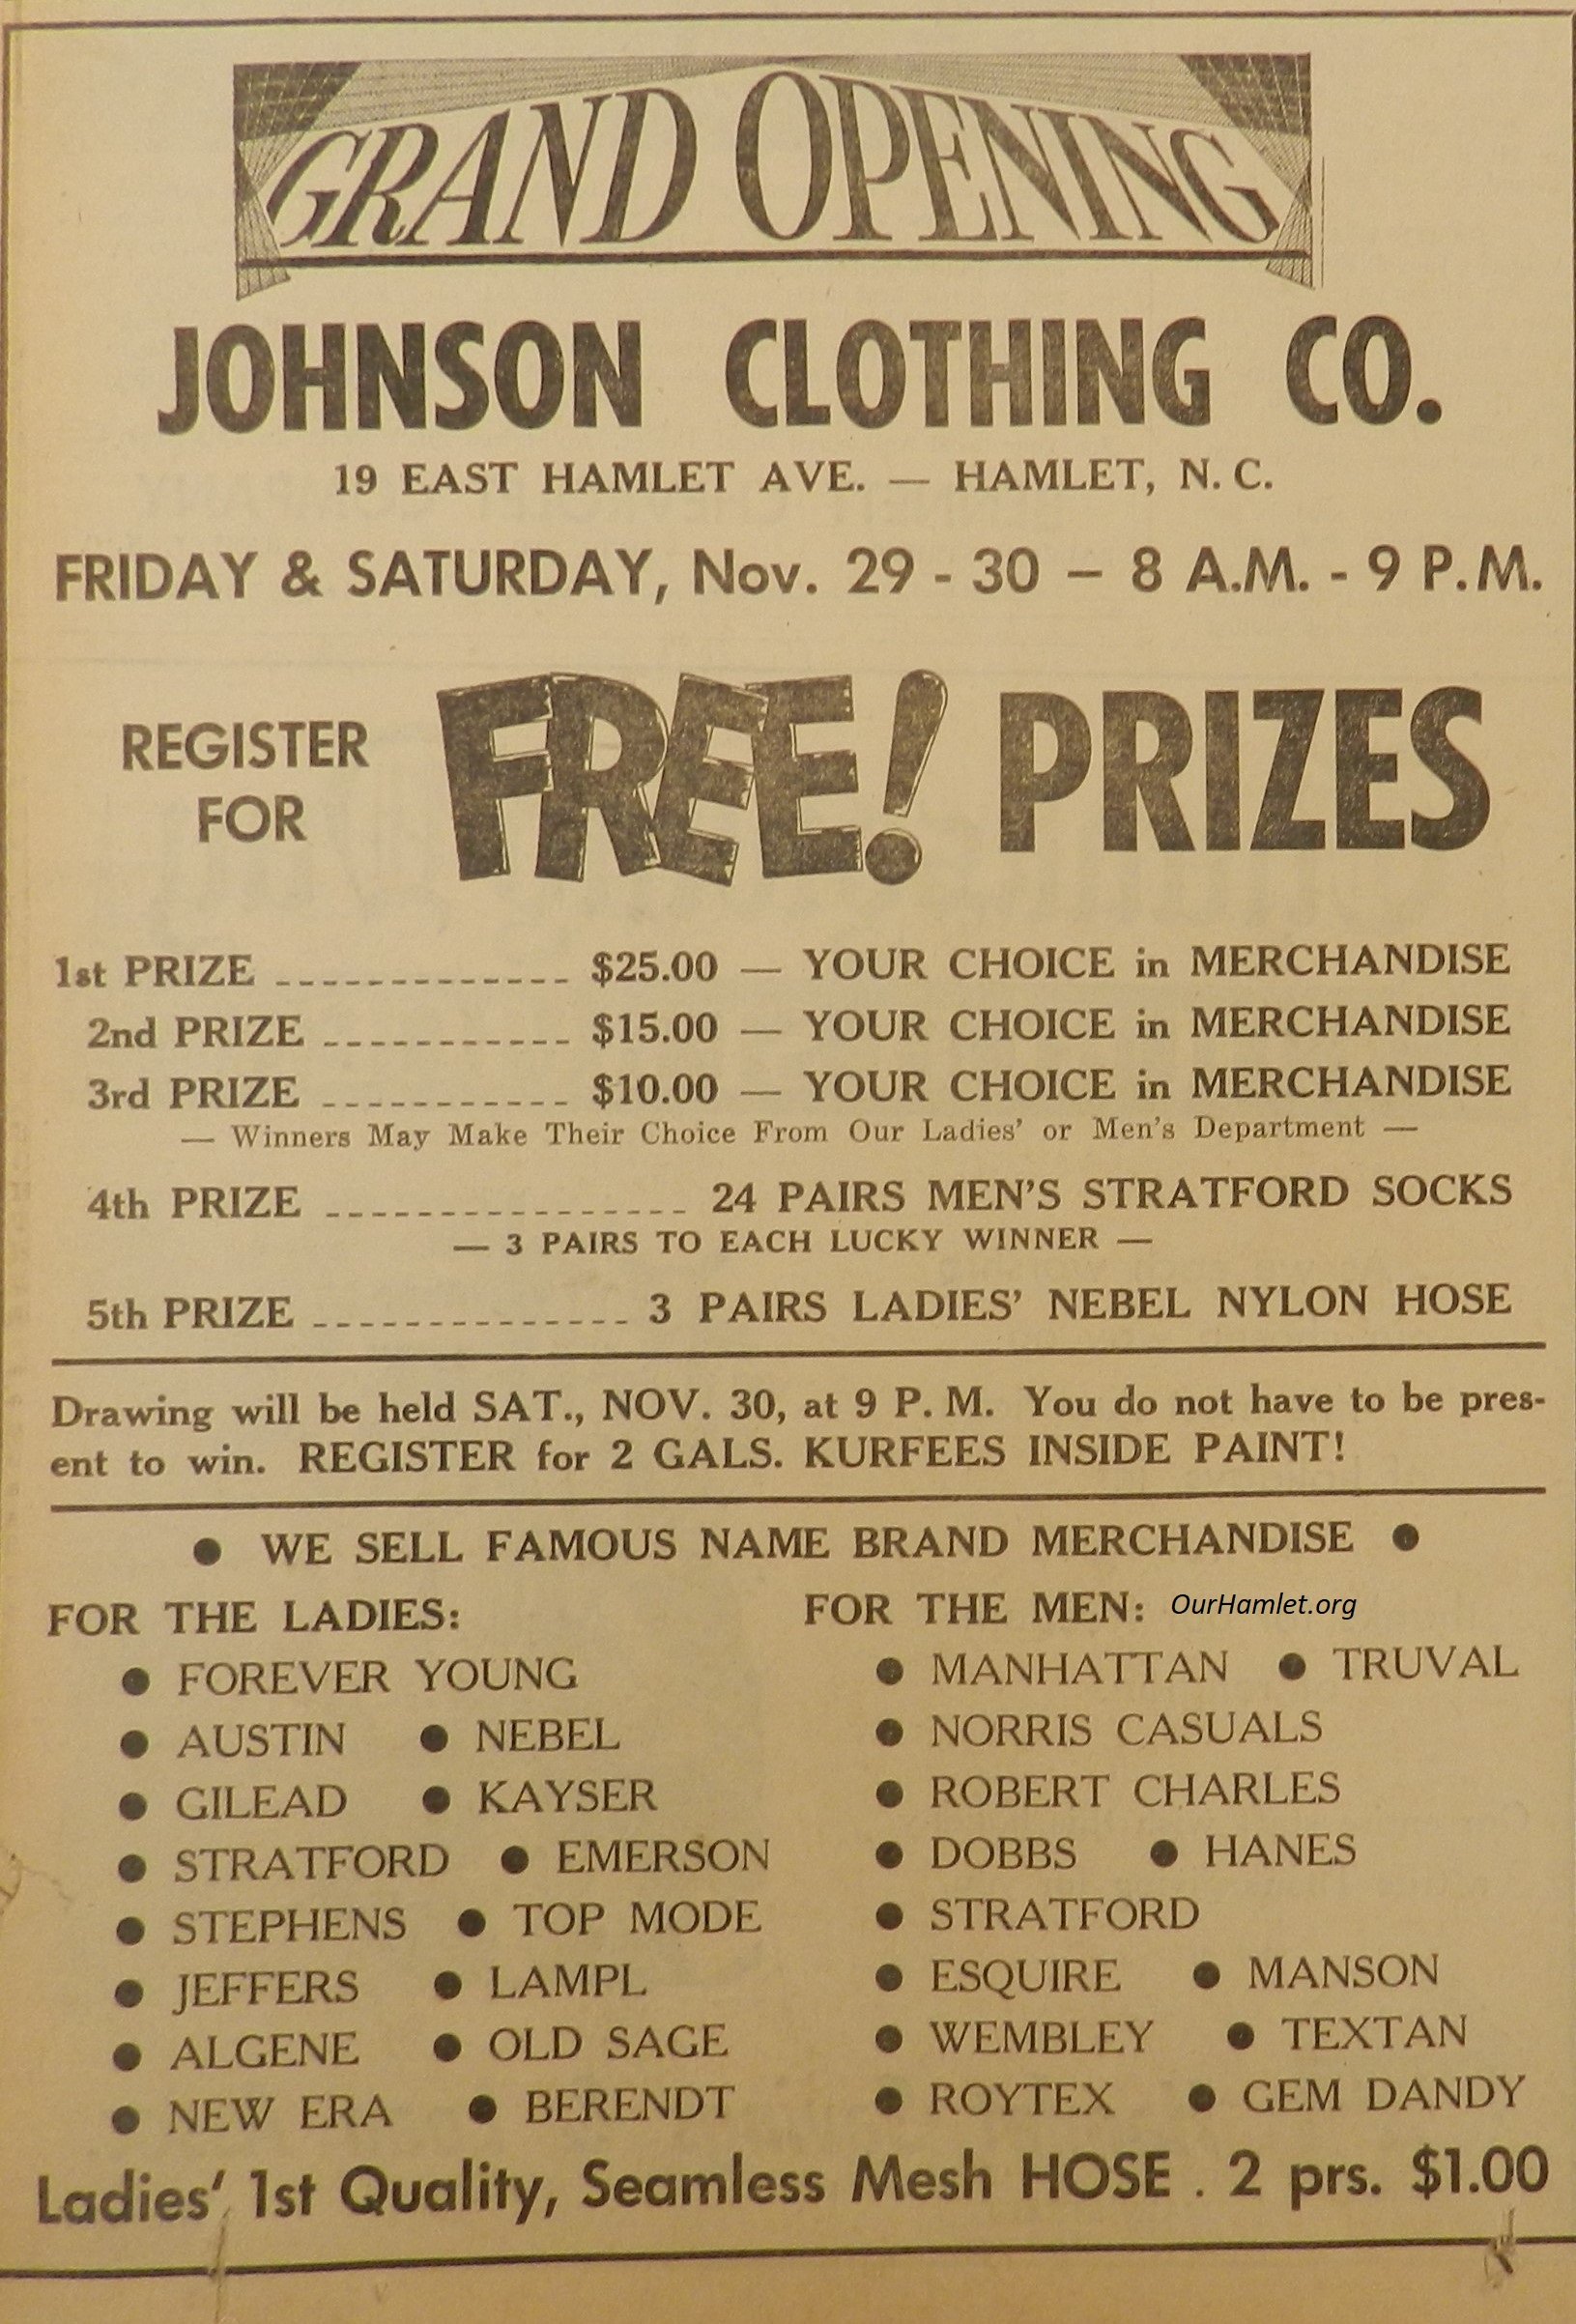 1963 Johnson Clothing Opening OH.jpg